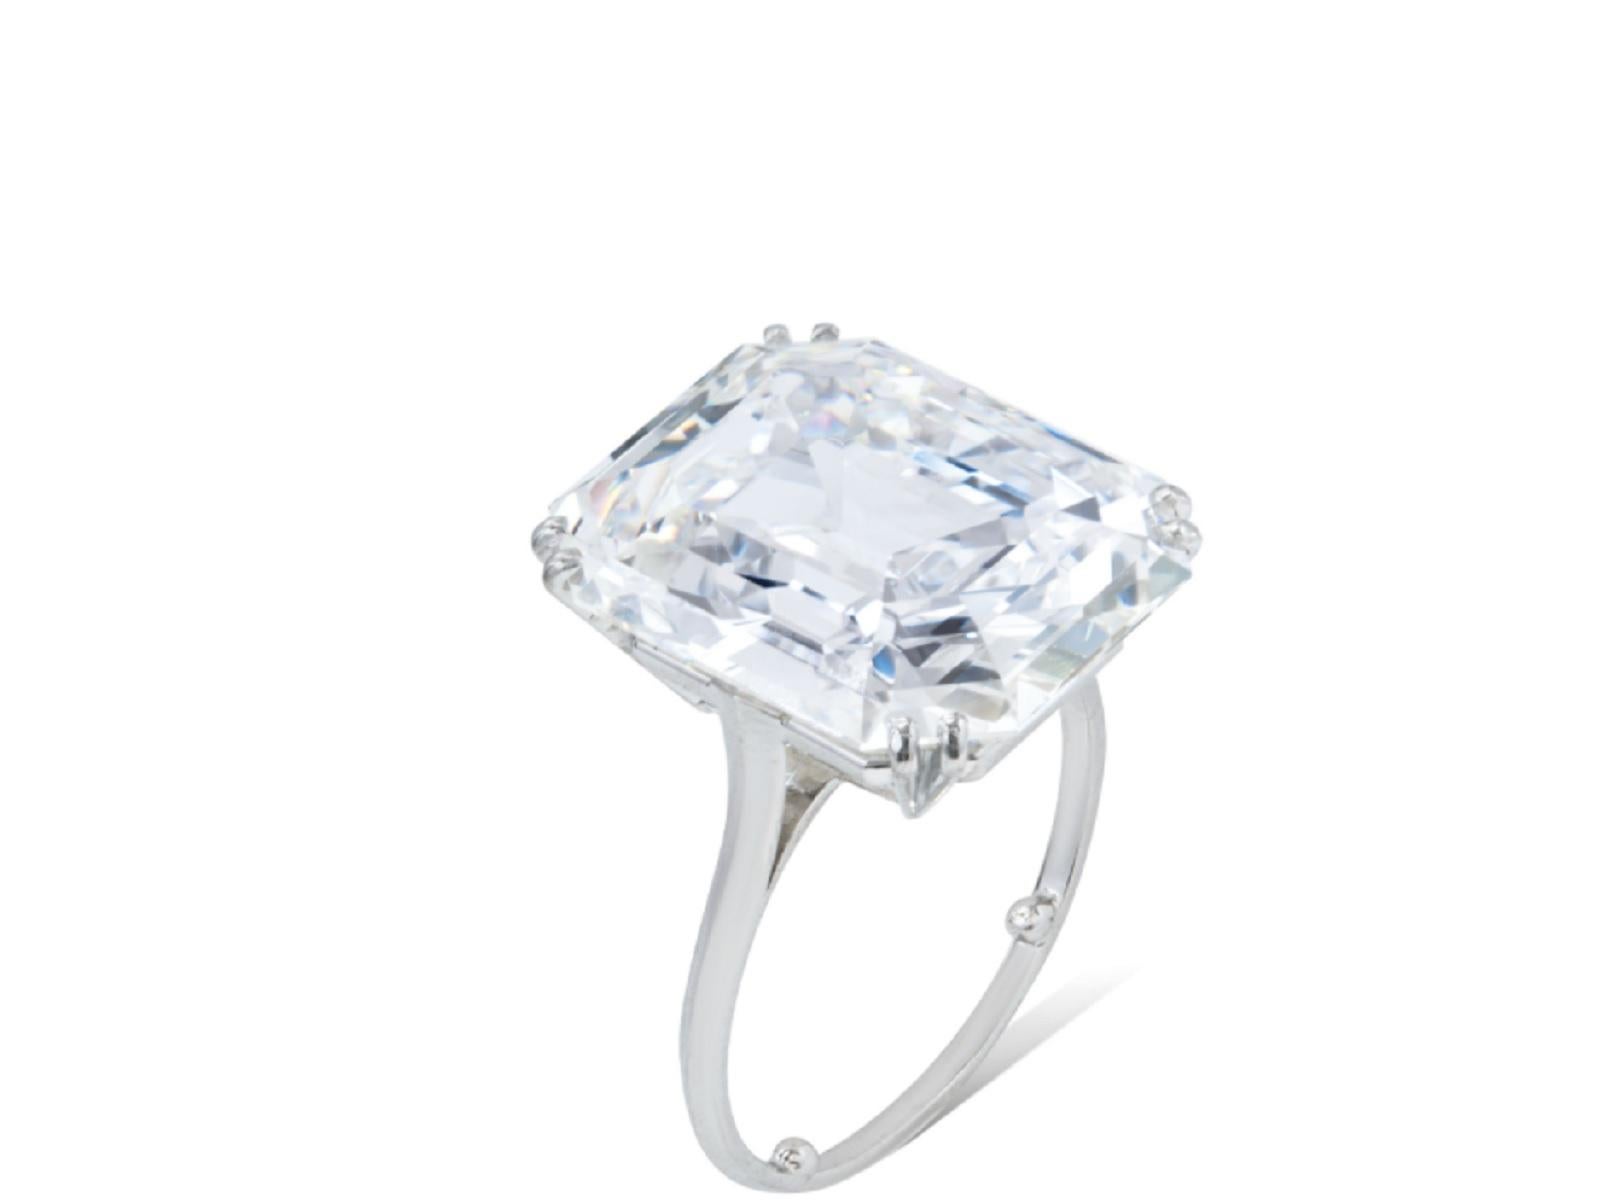 4 ct emerald cut diamond ring